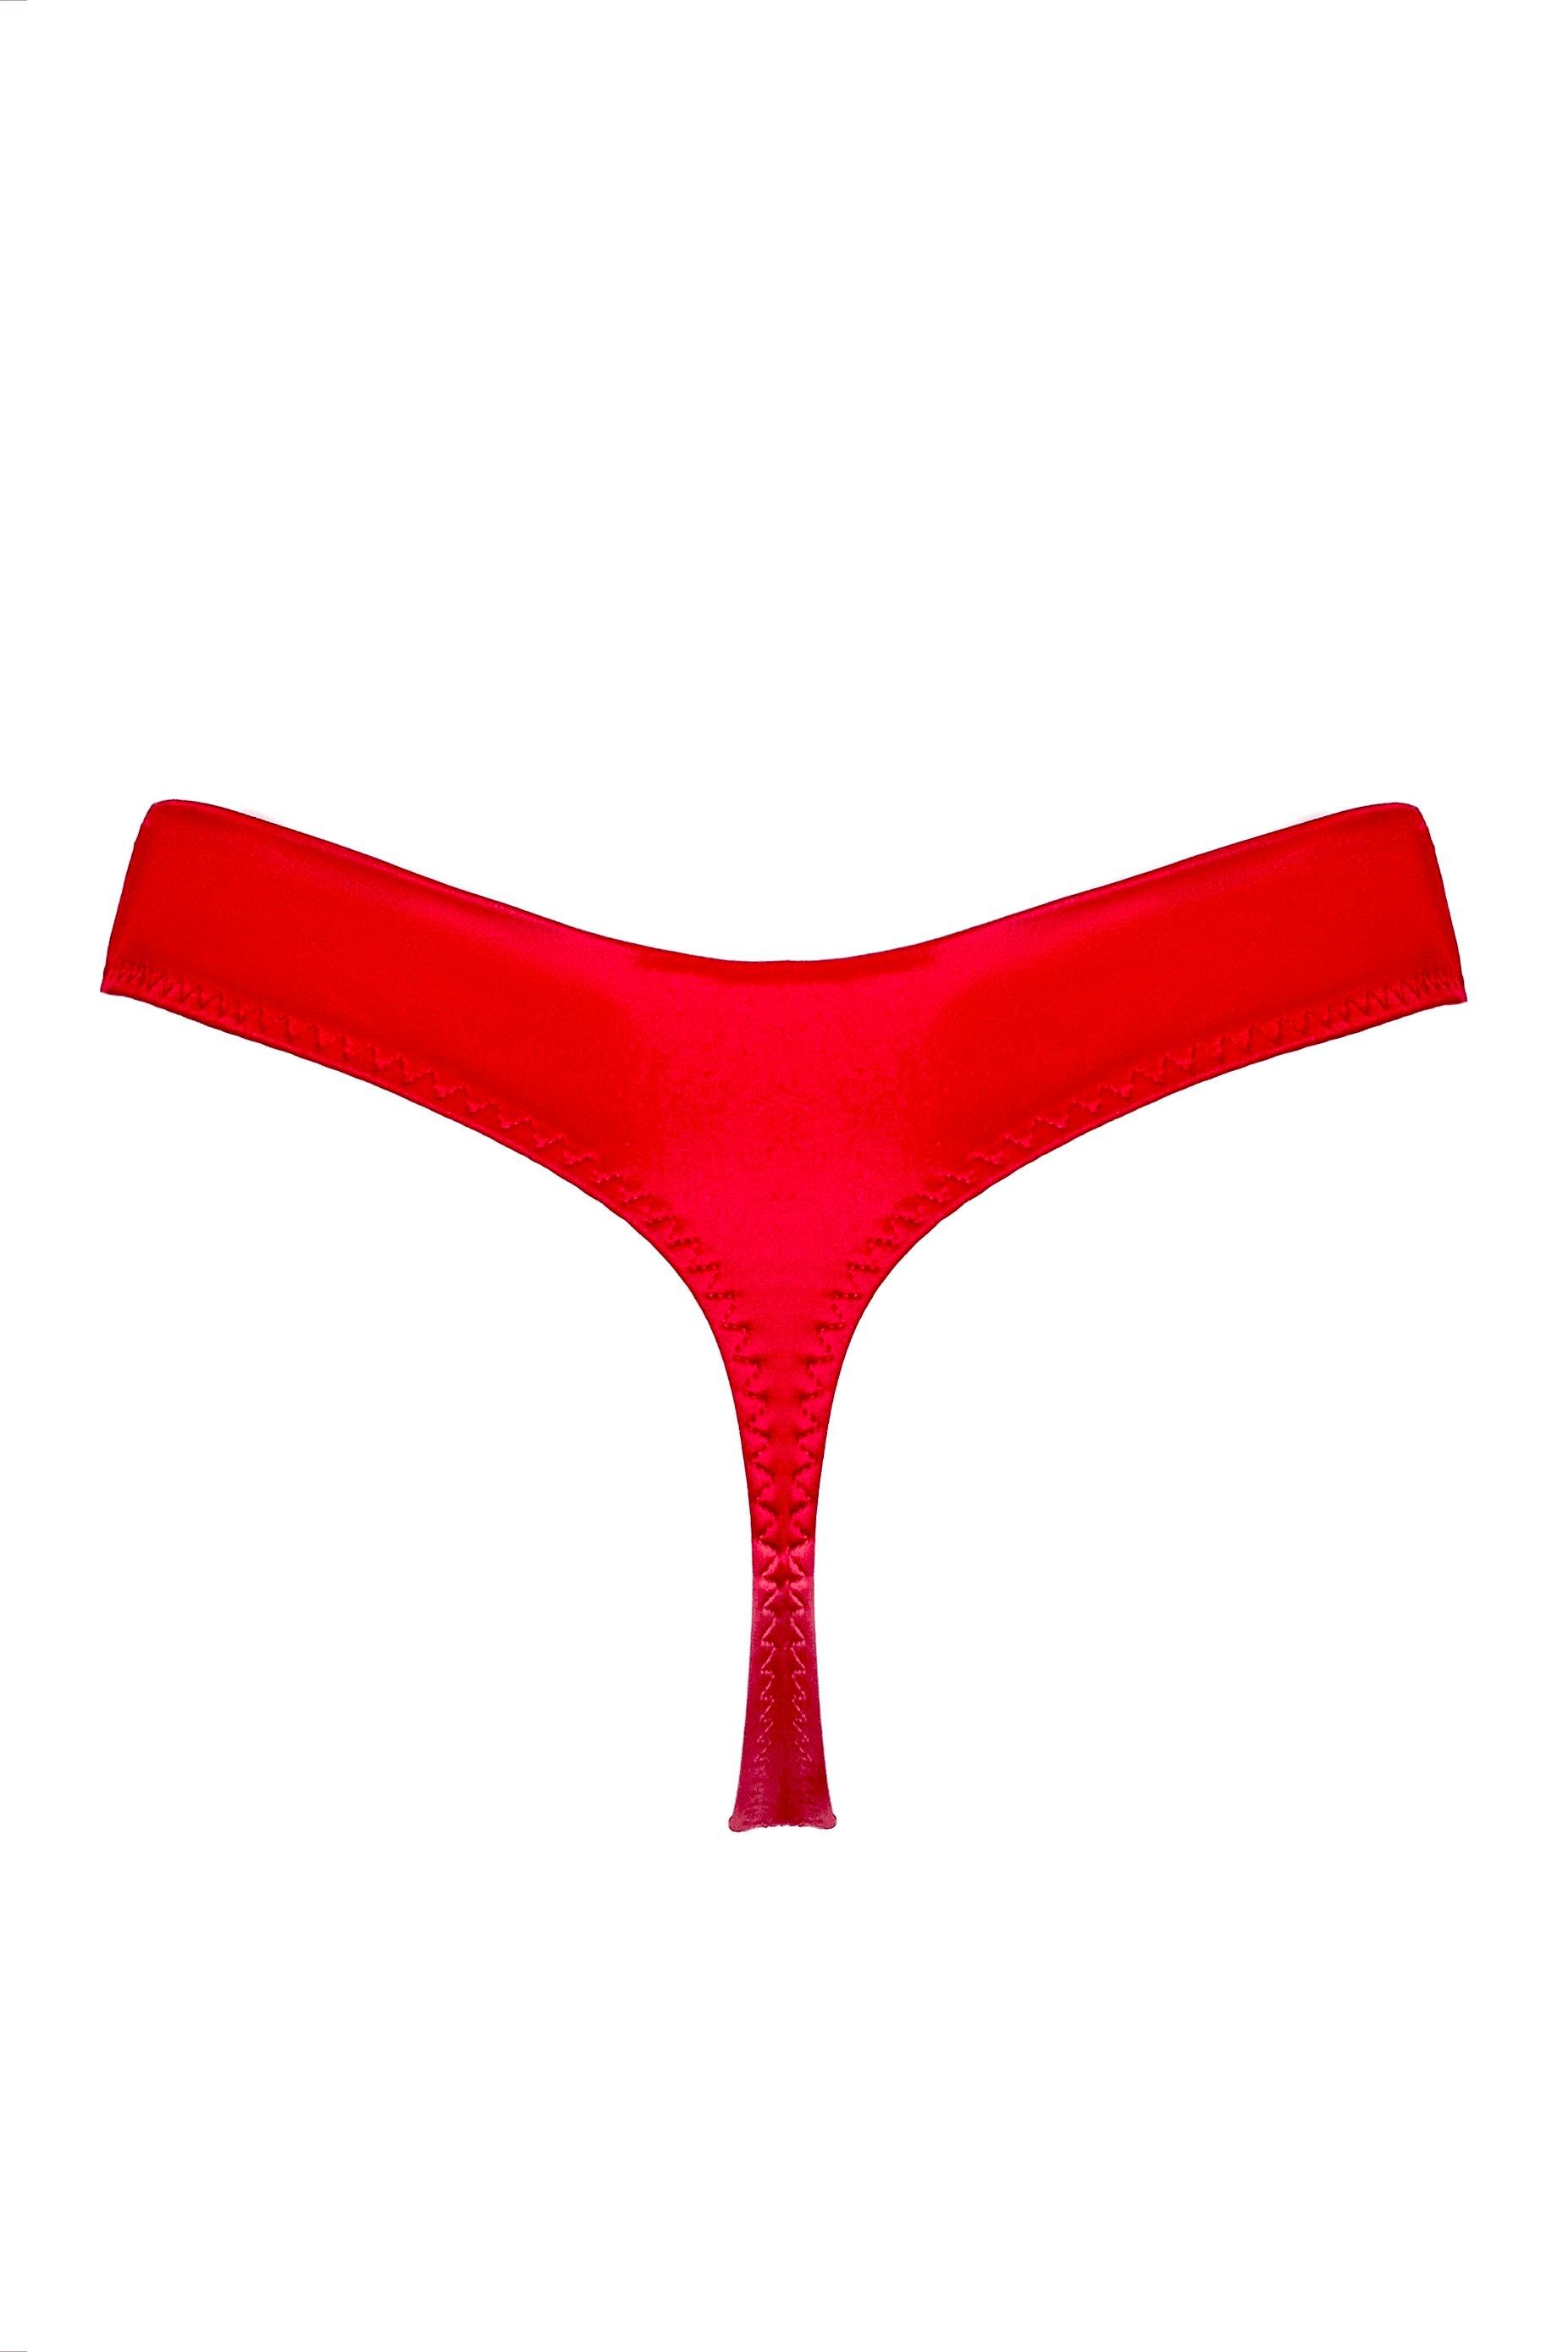 Cymothoe red thongs - yesUndress